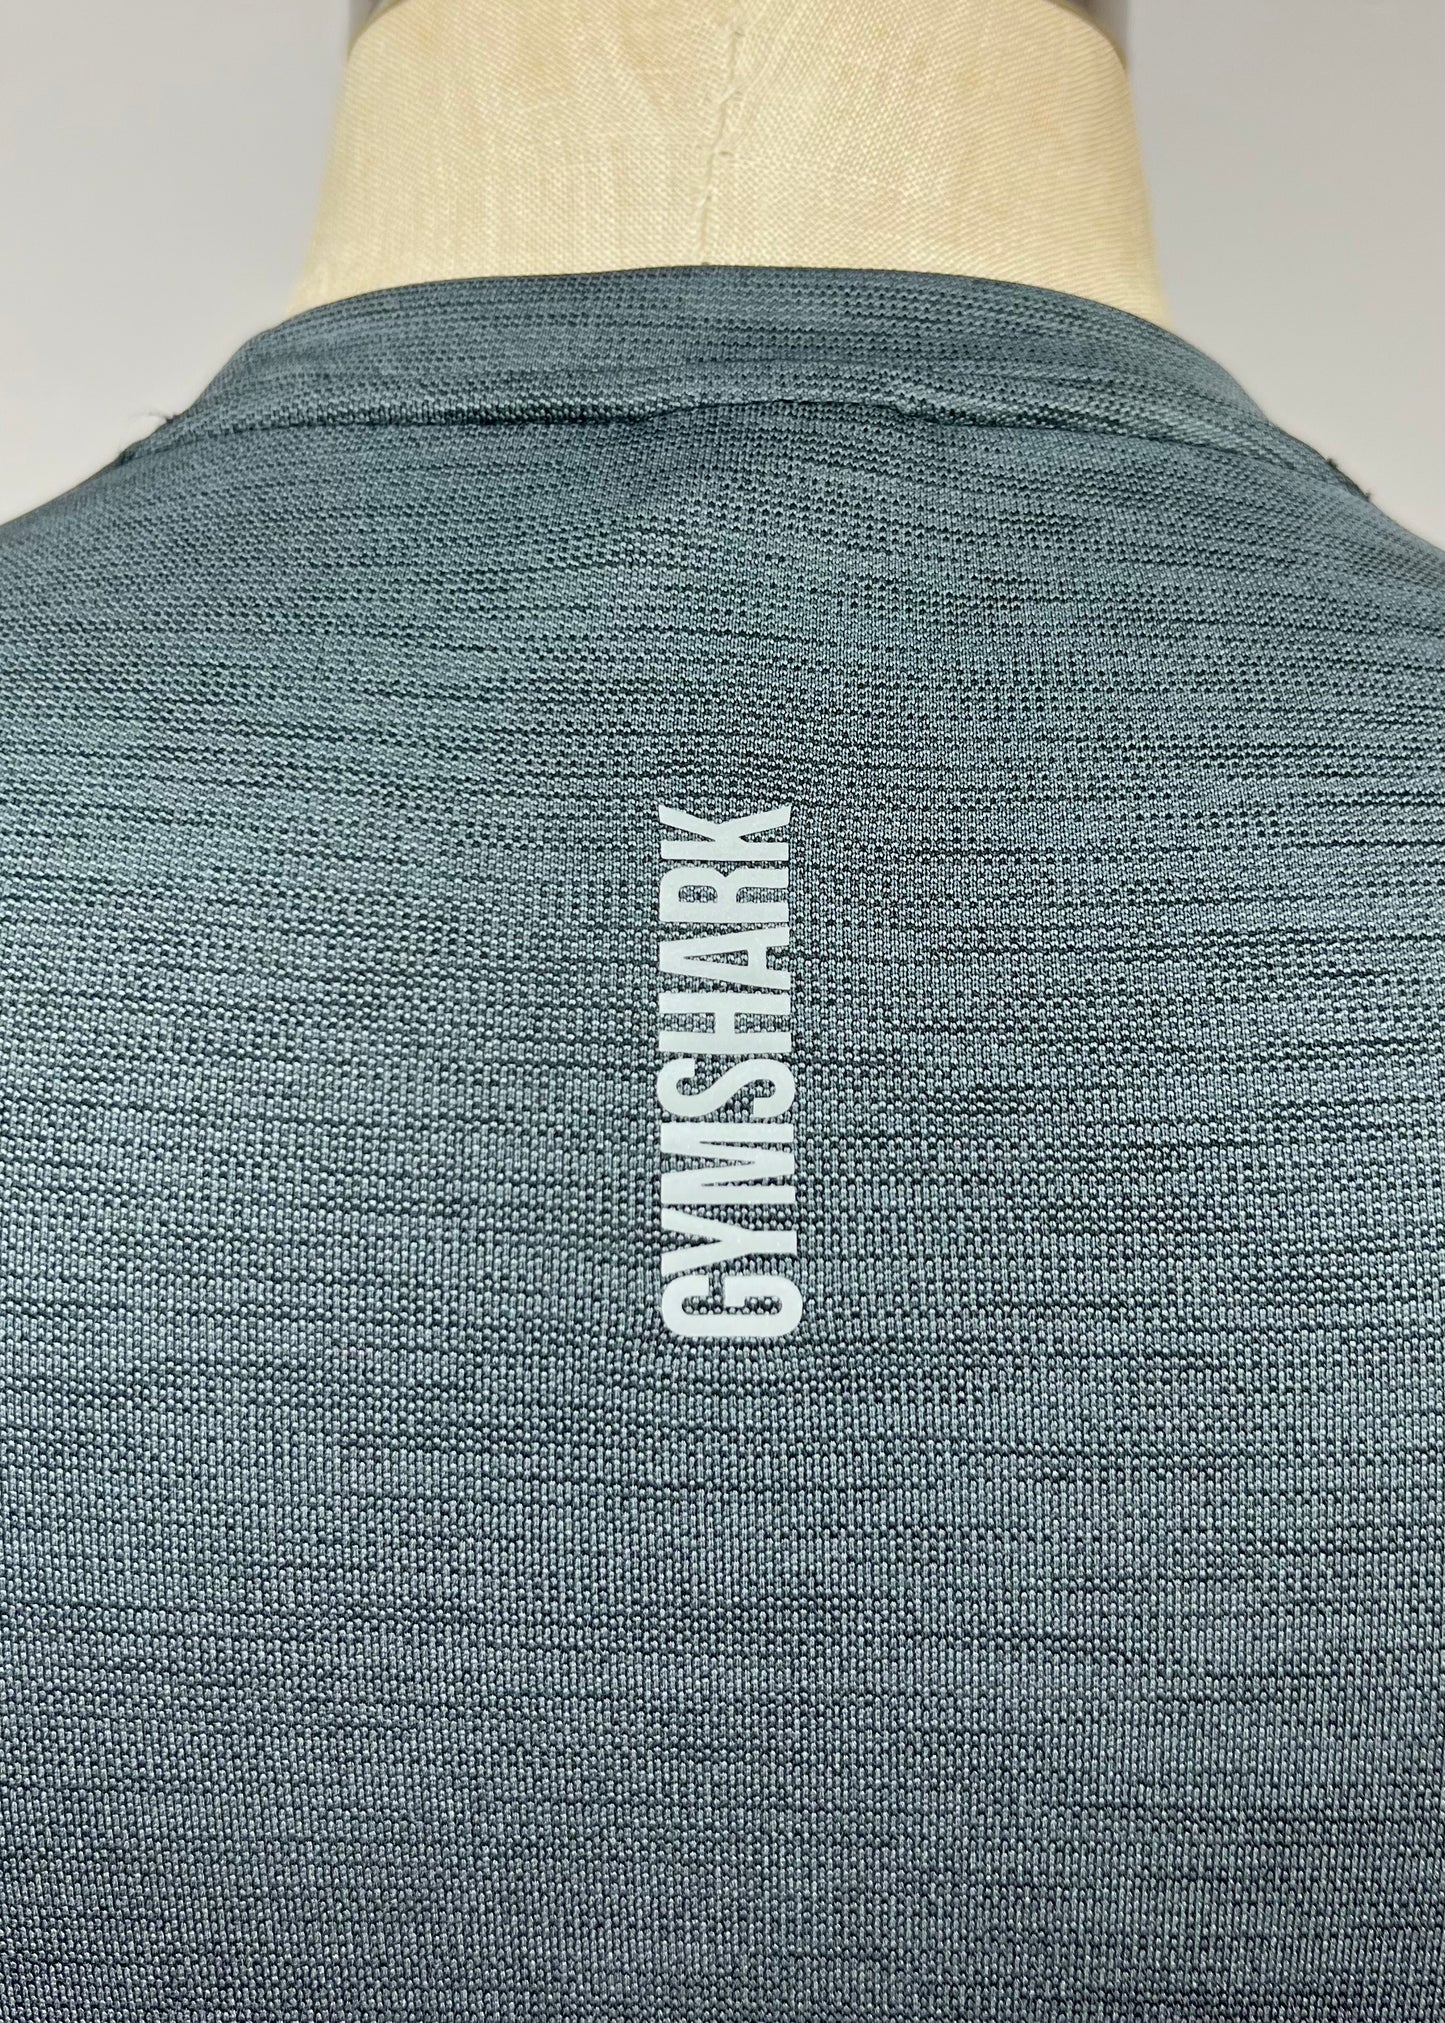 Camiseta de entrenamiento cuello redondo Gymshark 🏋🏽 color gris oscuro manga corta Talla M